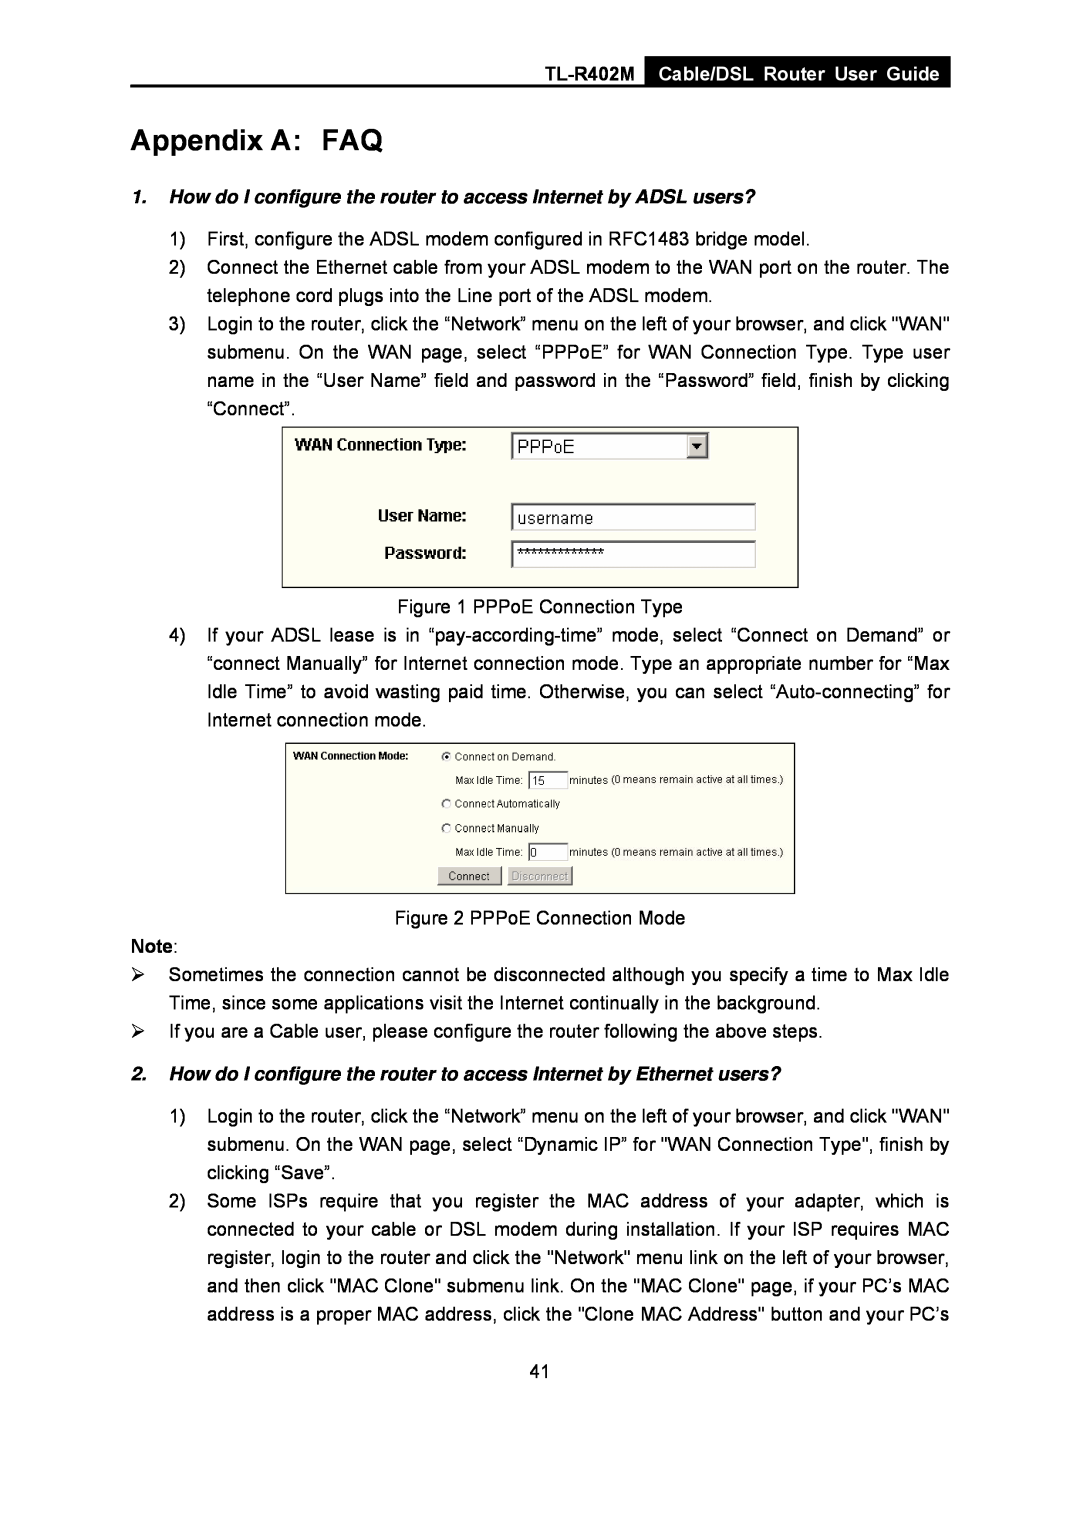 TP-Link manual Appendix A FAQ, TL-R402M Cable/DSL Router User Guide 